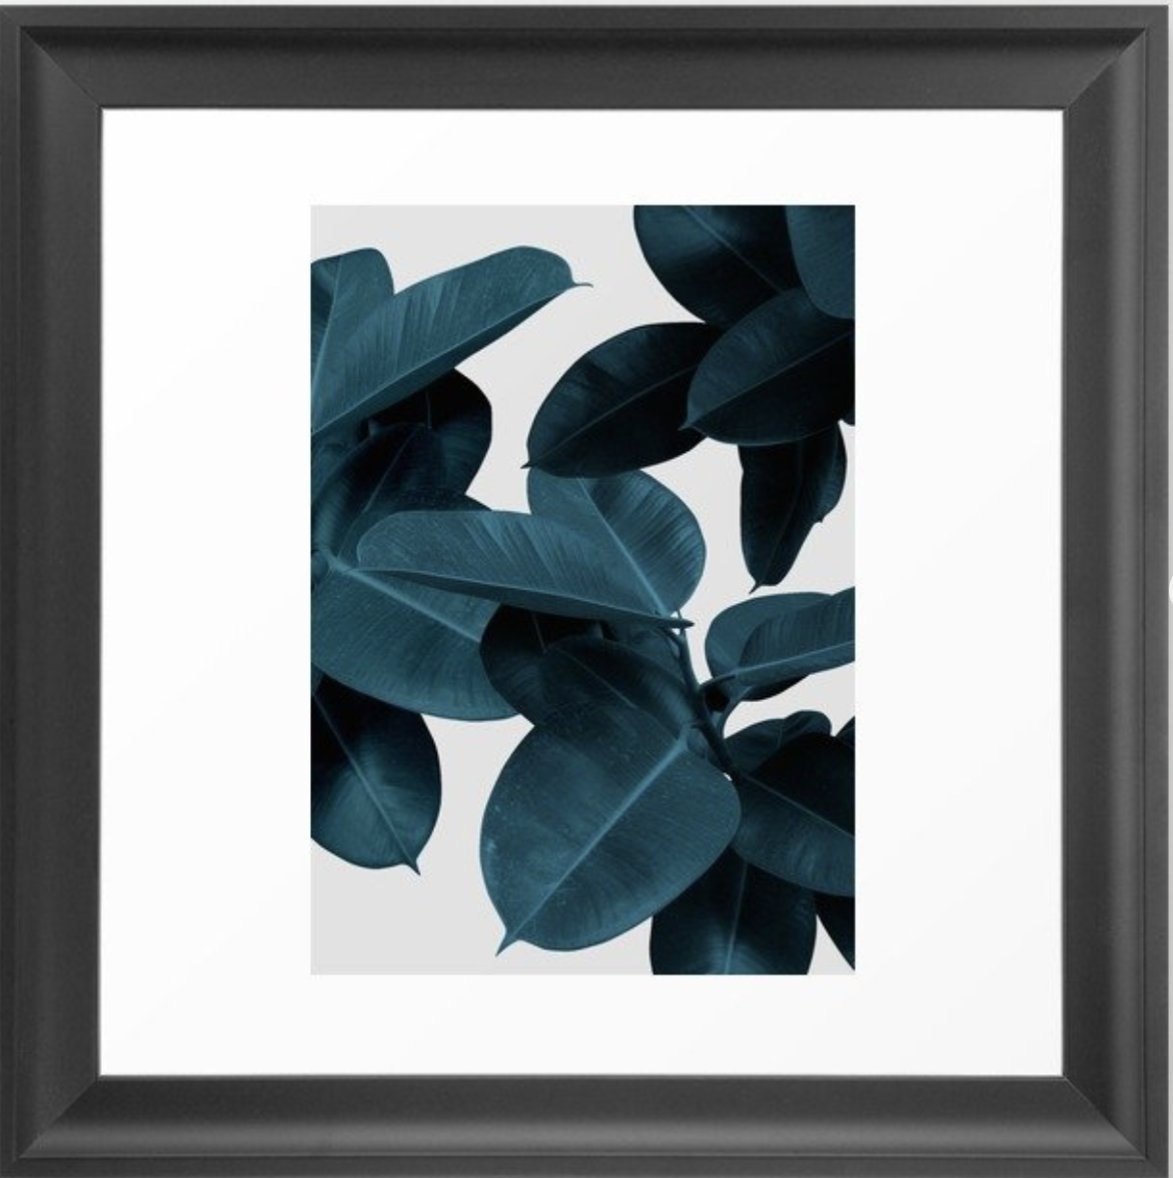 Indigo Plant Leaves Framed Art Print, 12" x 12" - Image 1